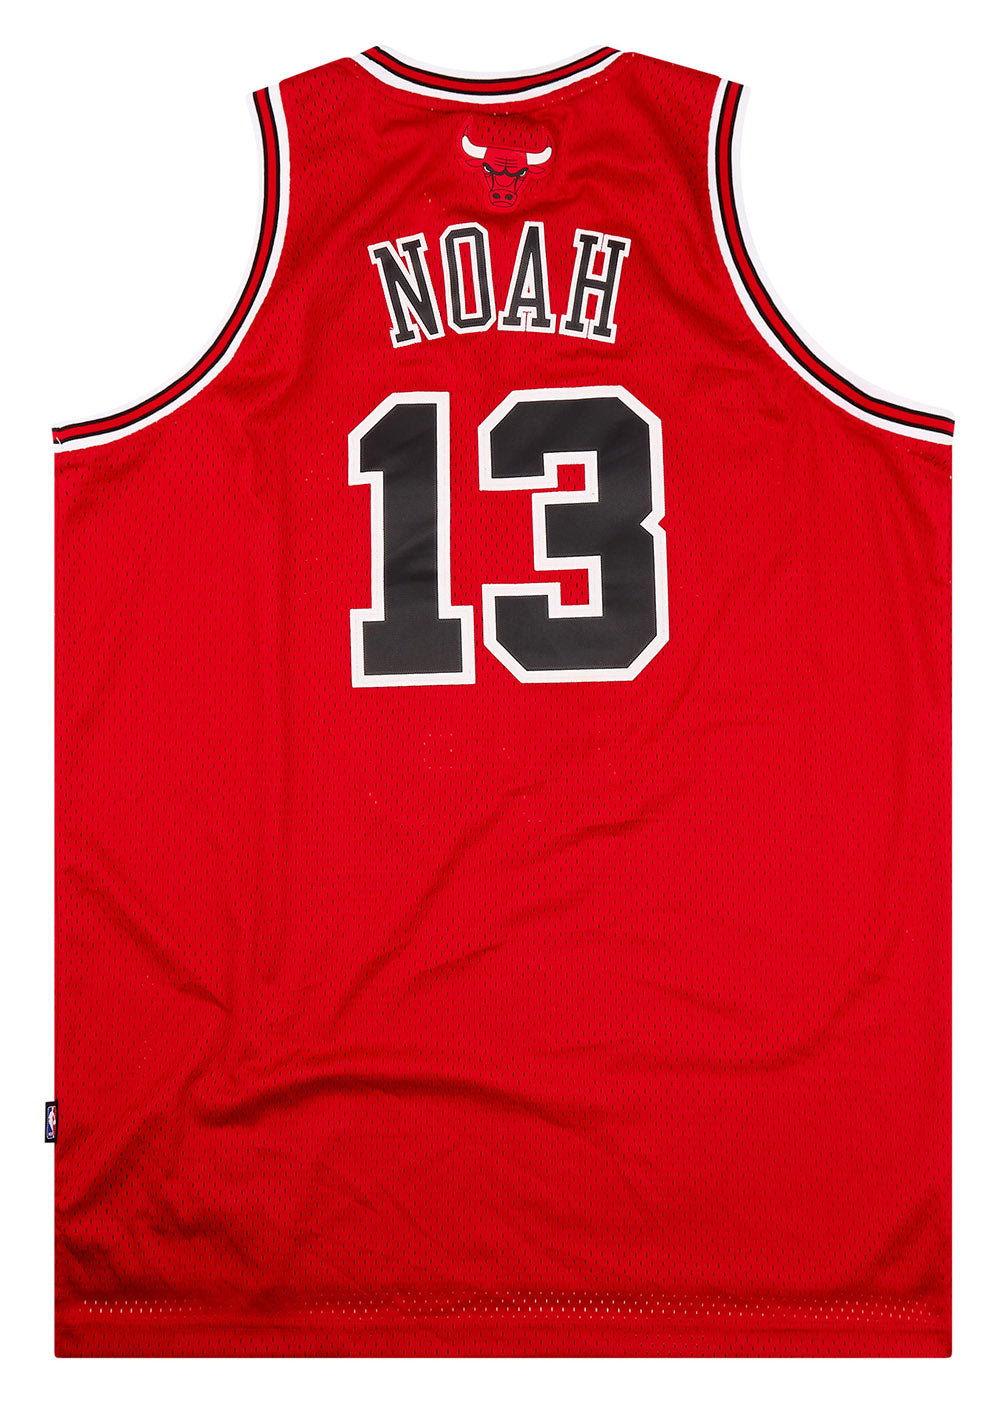 Men's Adidas NBA Chicago Bulls Jersey Size XL +2 New Basketball Red  Black Noah